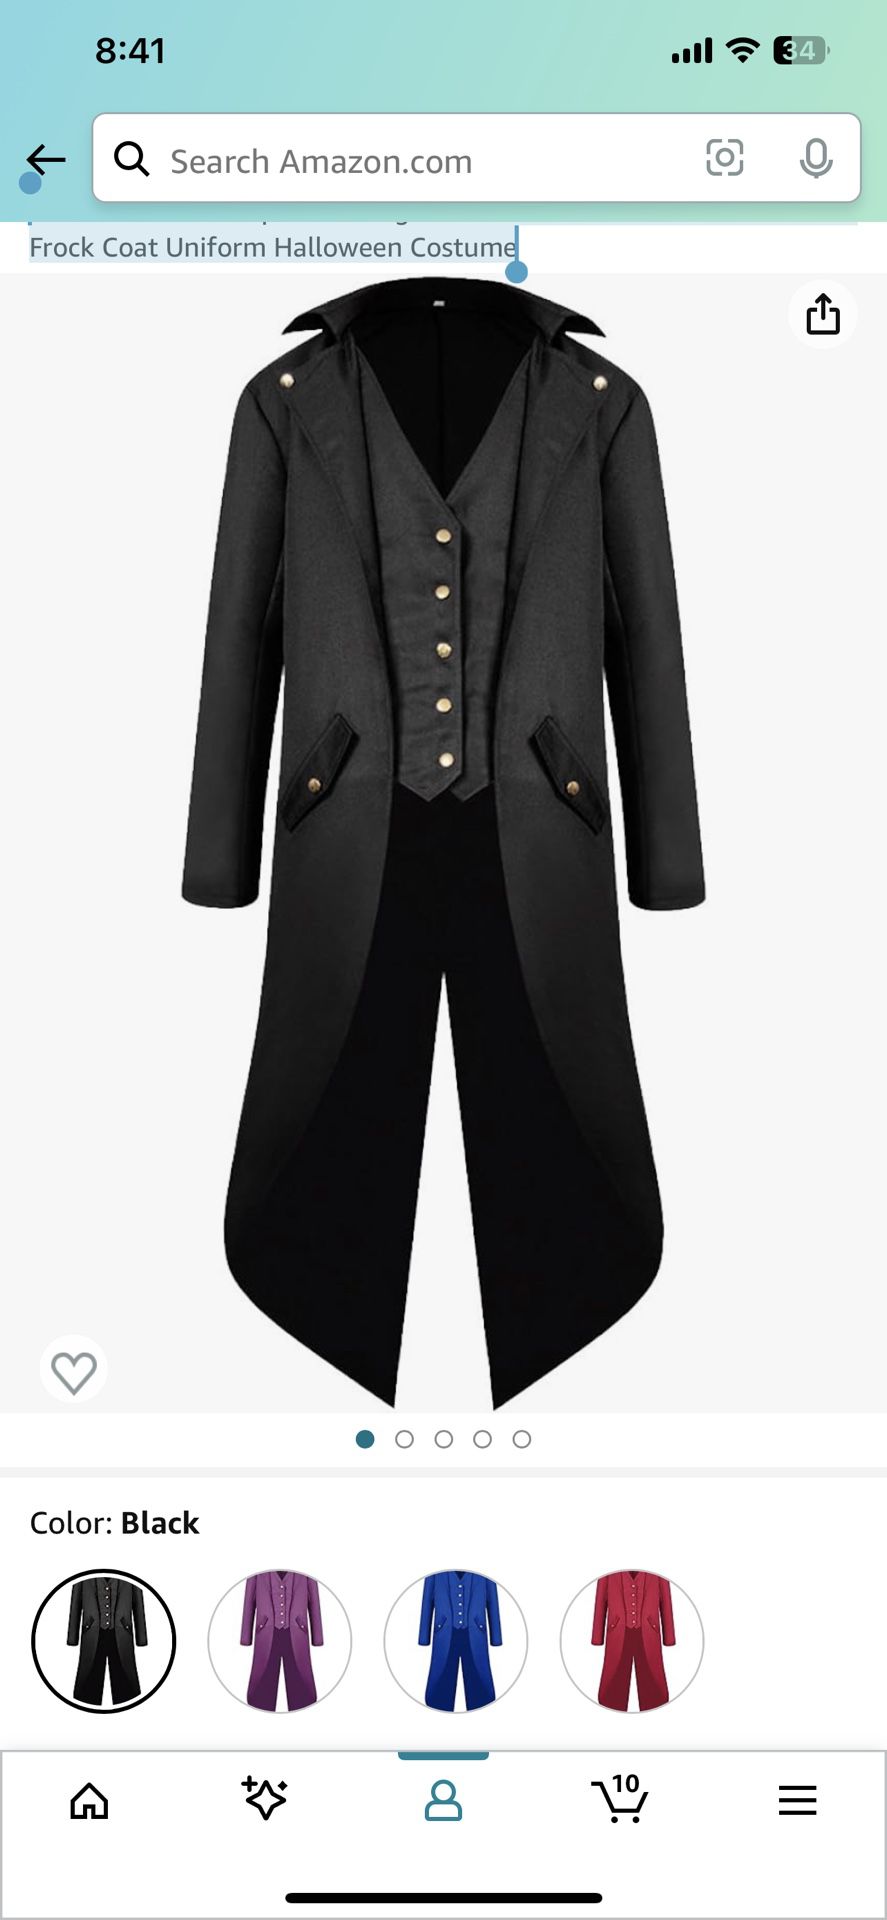 H&ZY Unisex Steampunk Vintage Tailcoat Jacket Gothic Victorian Frock Coat Uniform Halloween Costume